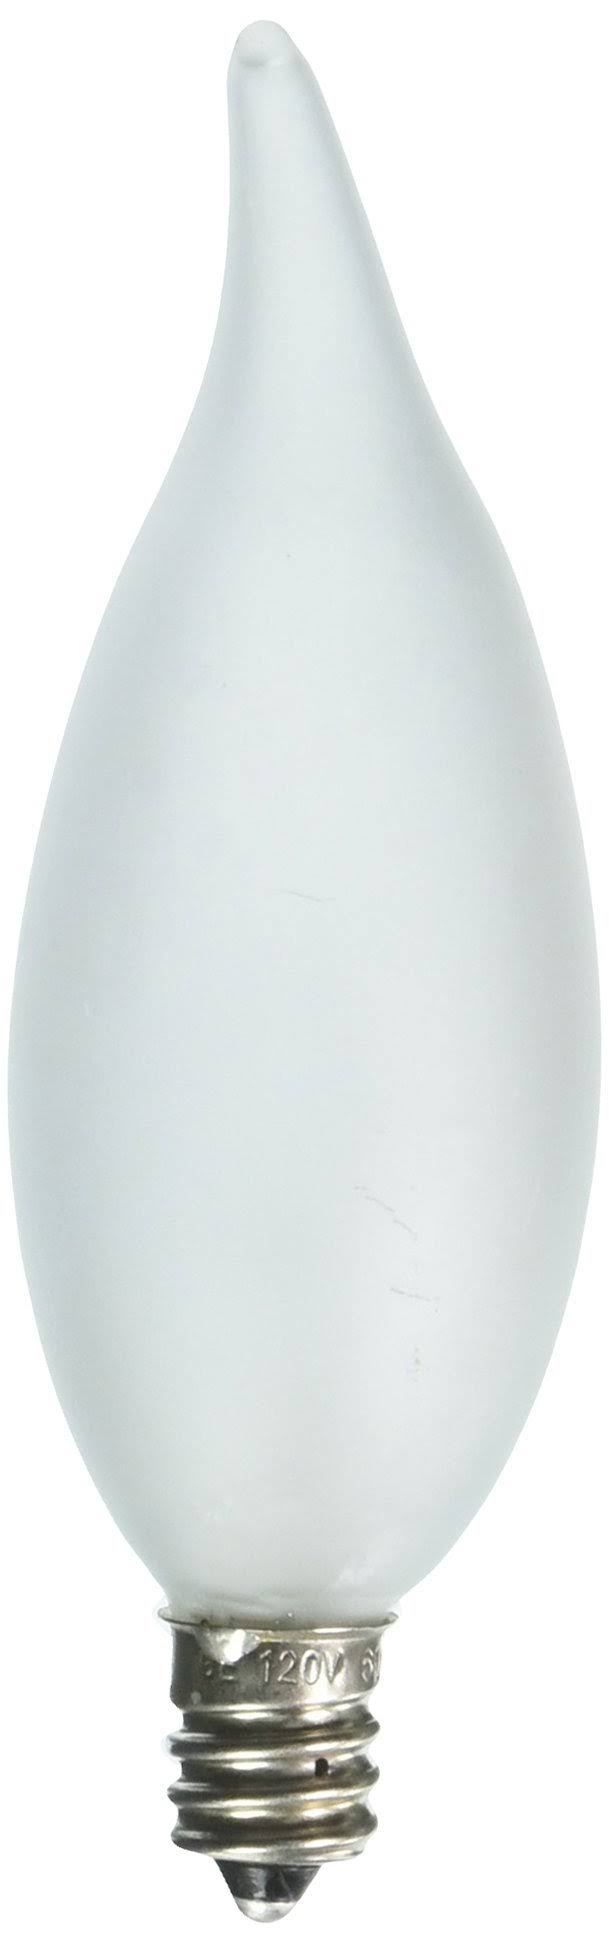 Ge Lighting 66108 Candelabra Decorative Light Bulb - 2pk, 60W, Soft White